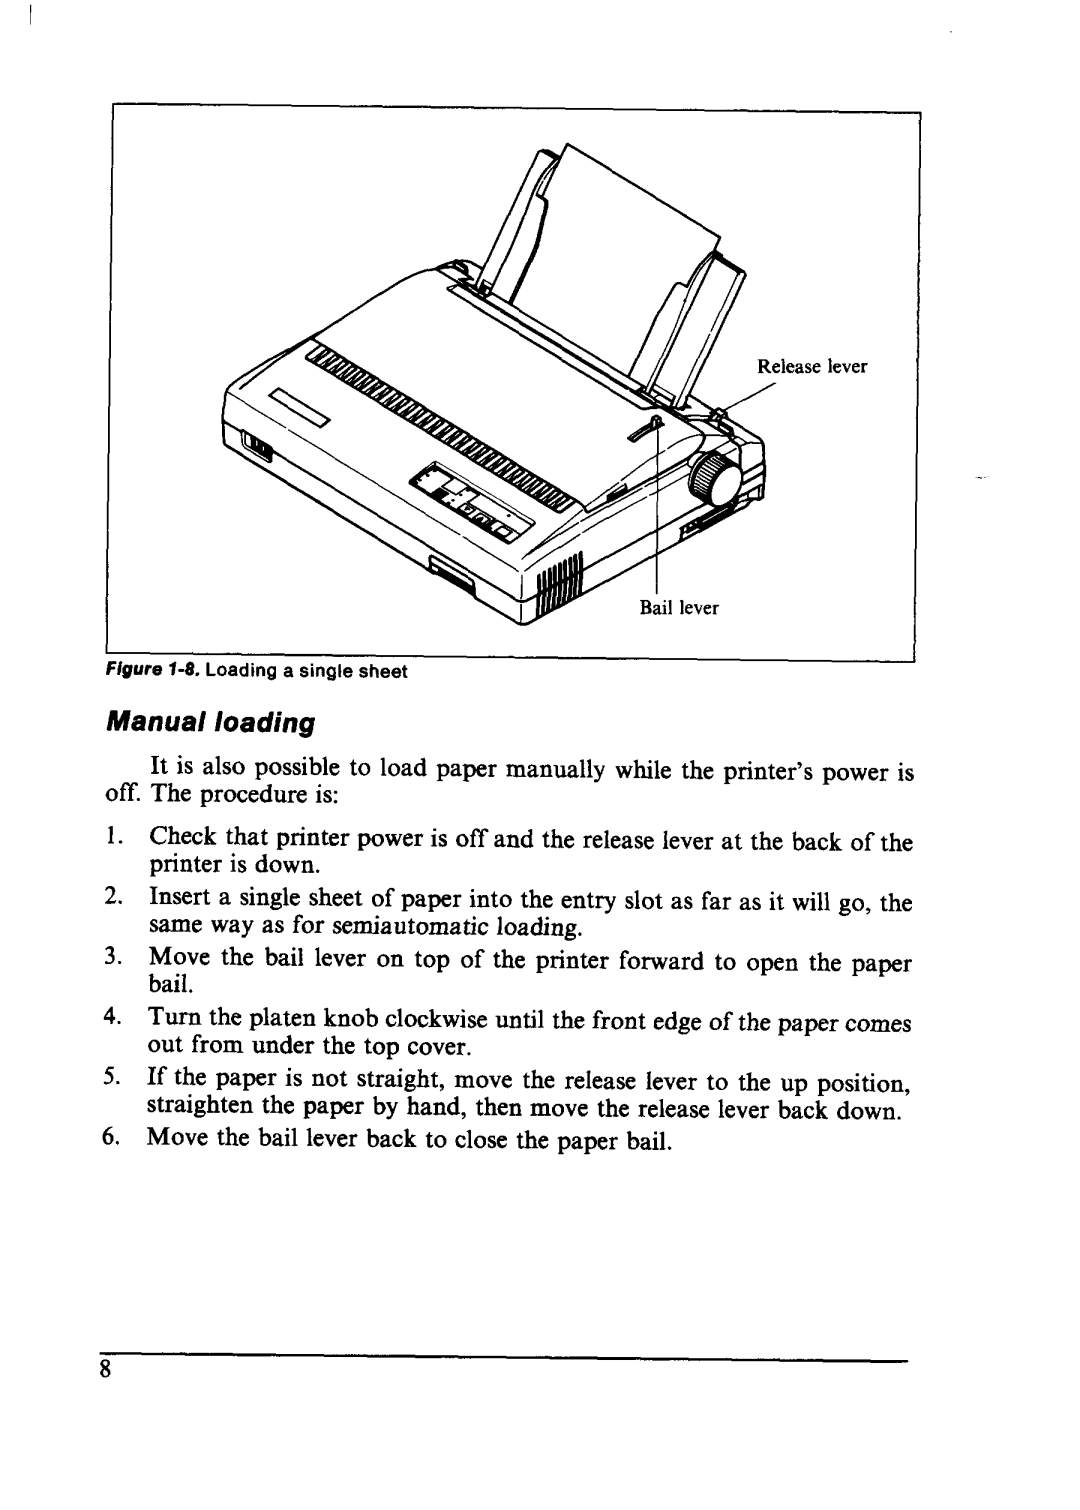 Star Micronics LC24-10 user manual Manual loading 